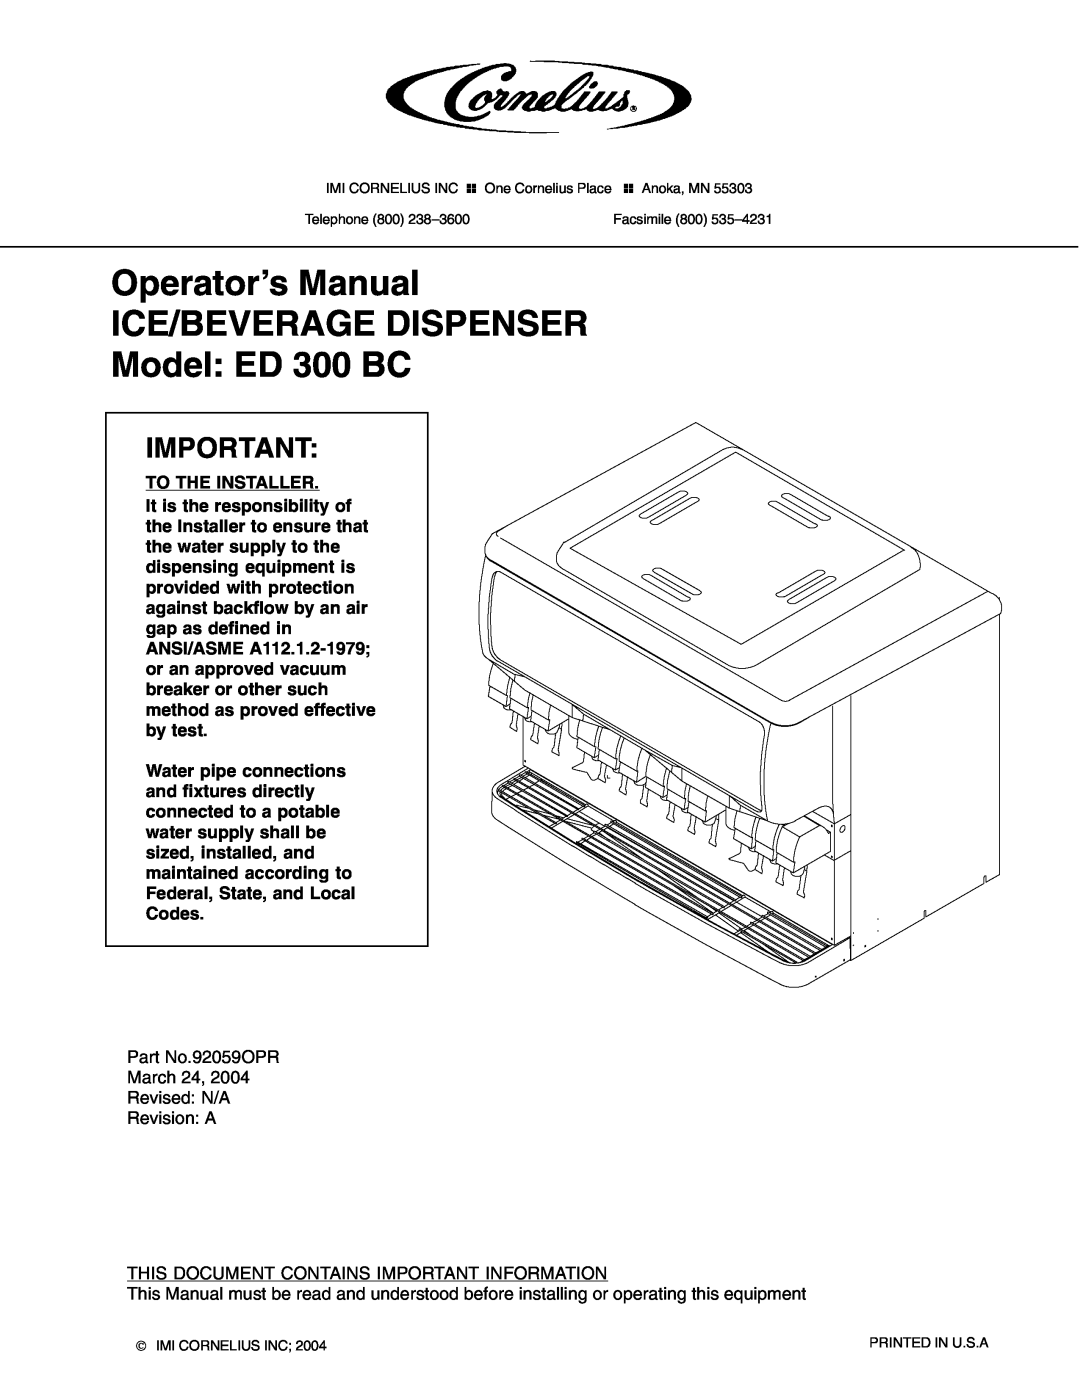 Cornelius manual To The Installer, Operator’s Manual ICE/BEVERAGE DISPENSER, Model ED 300 BC 